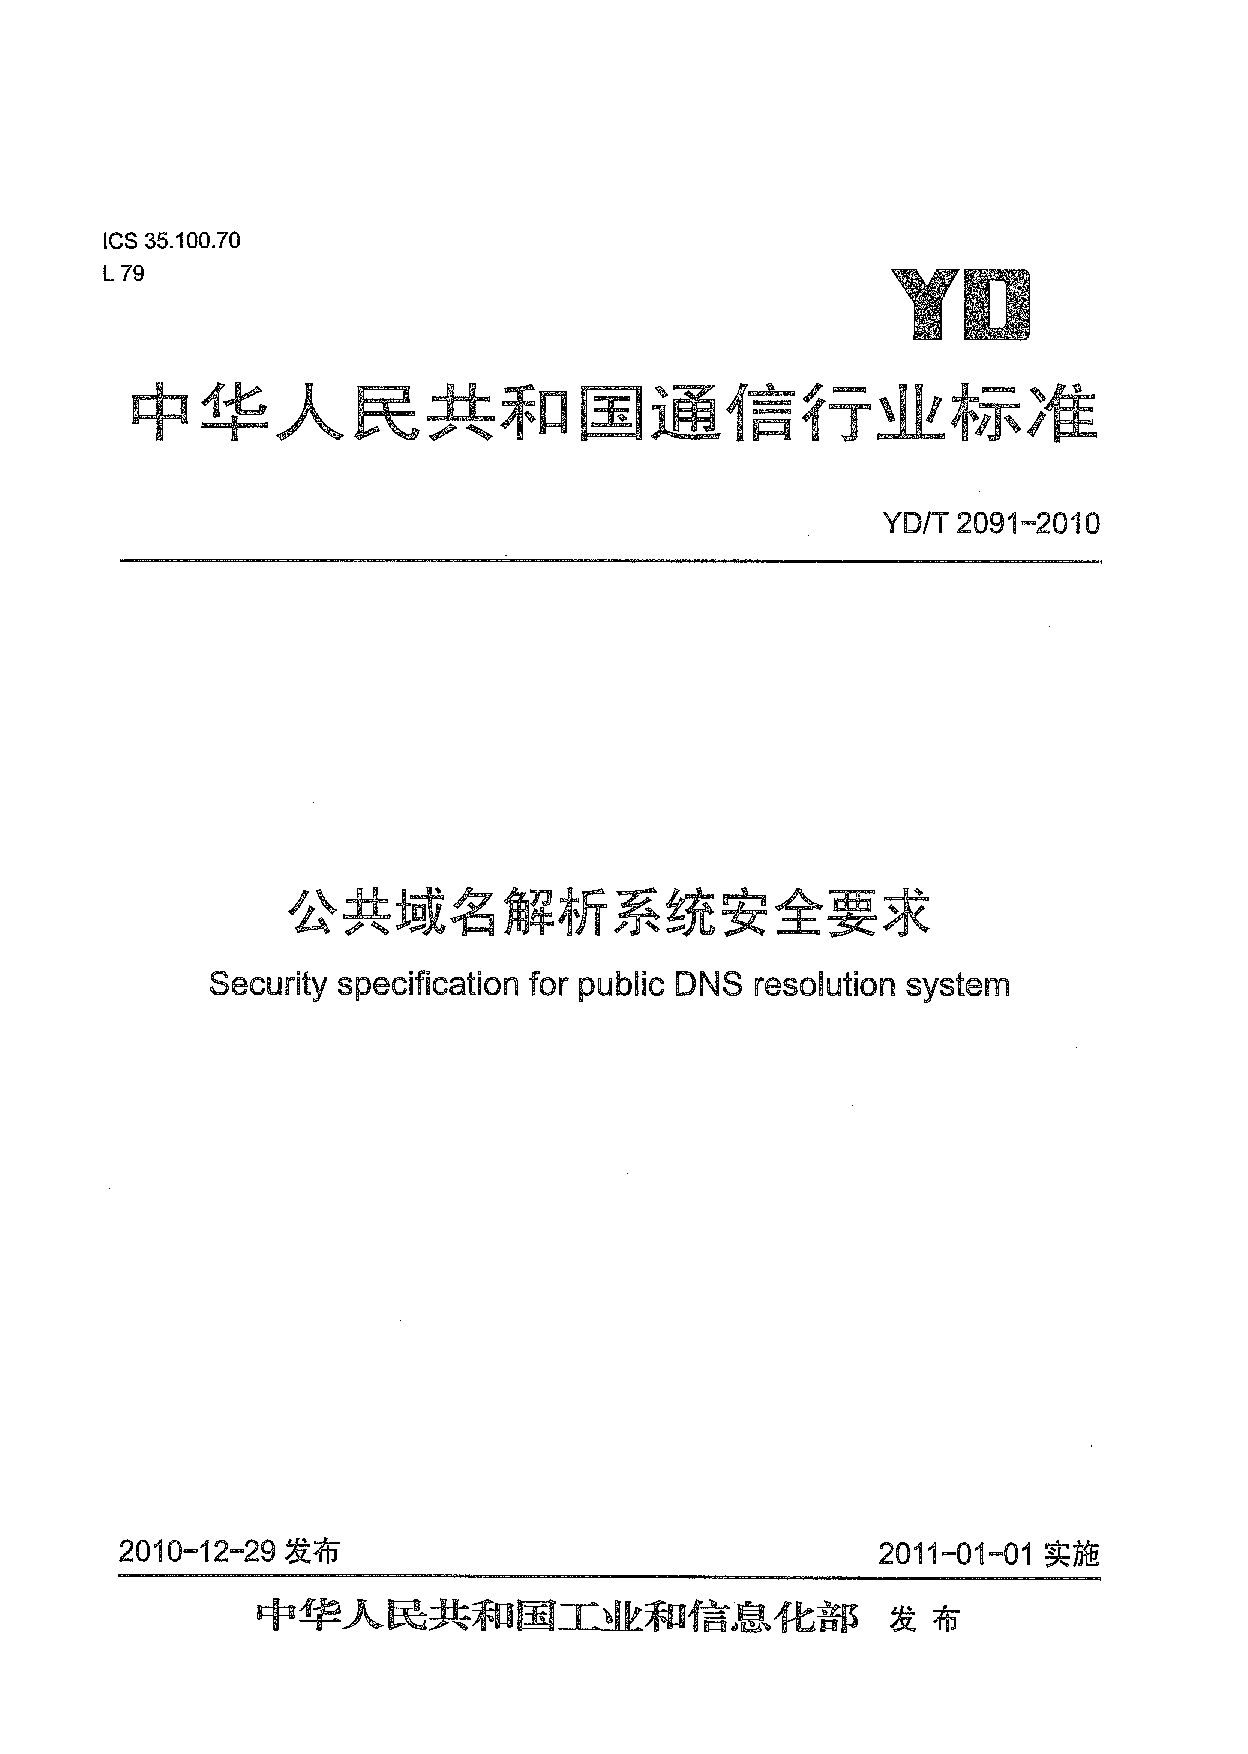 YD/T 2091-2010封面图